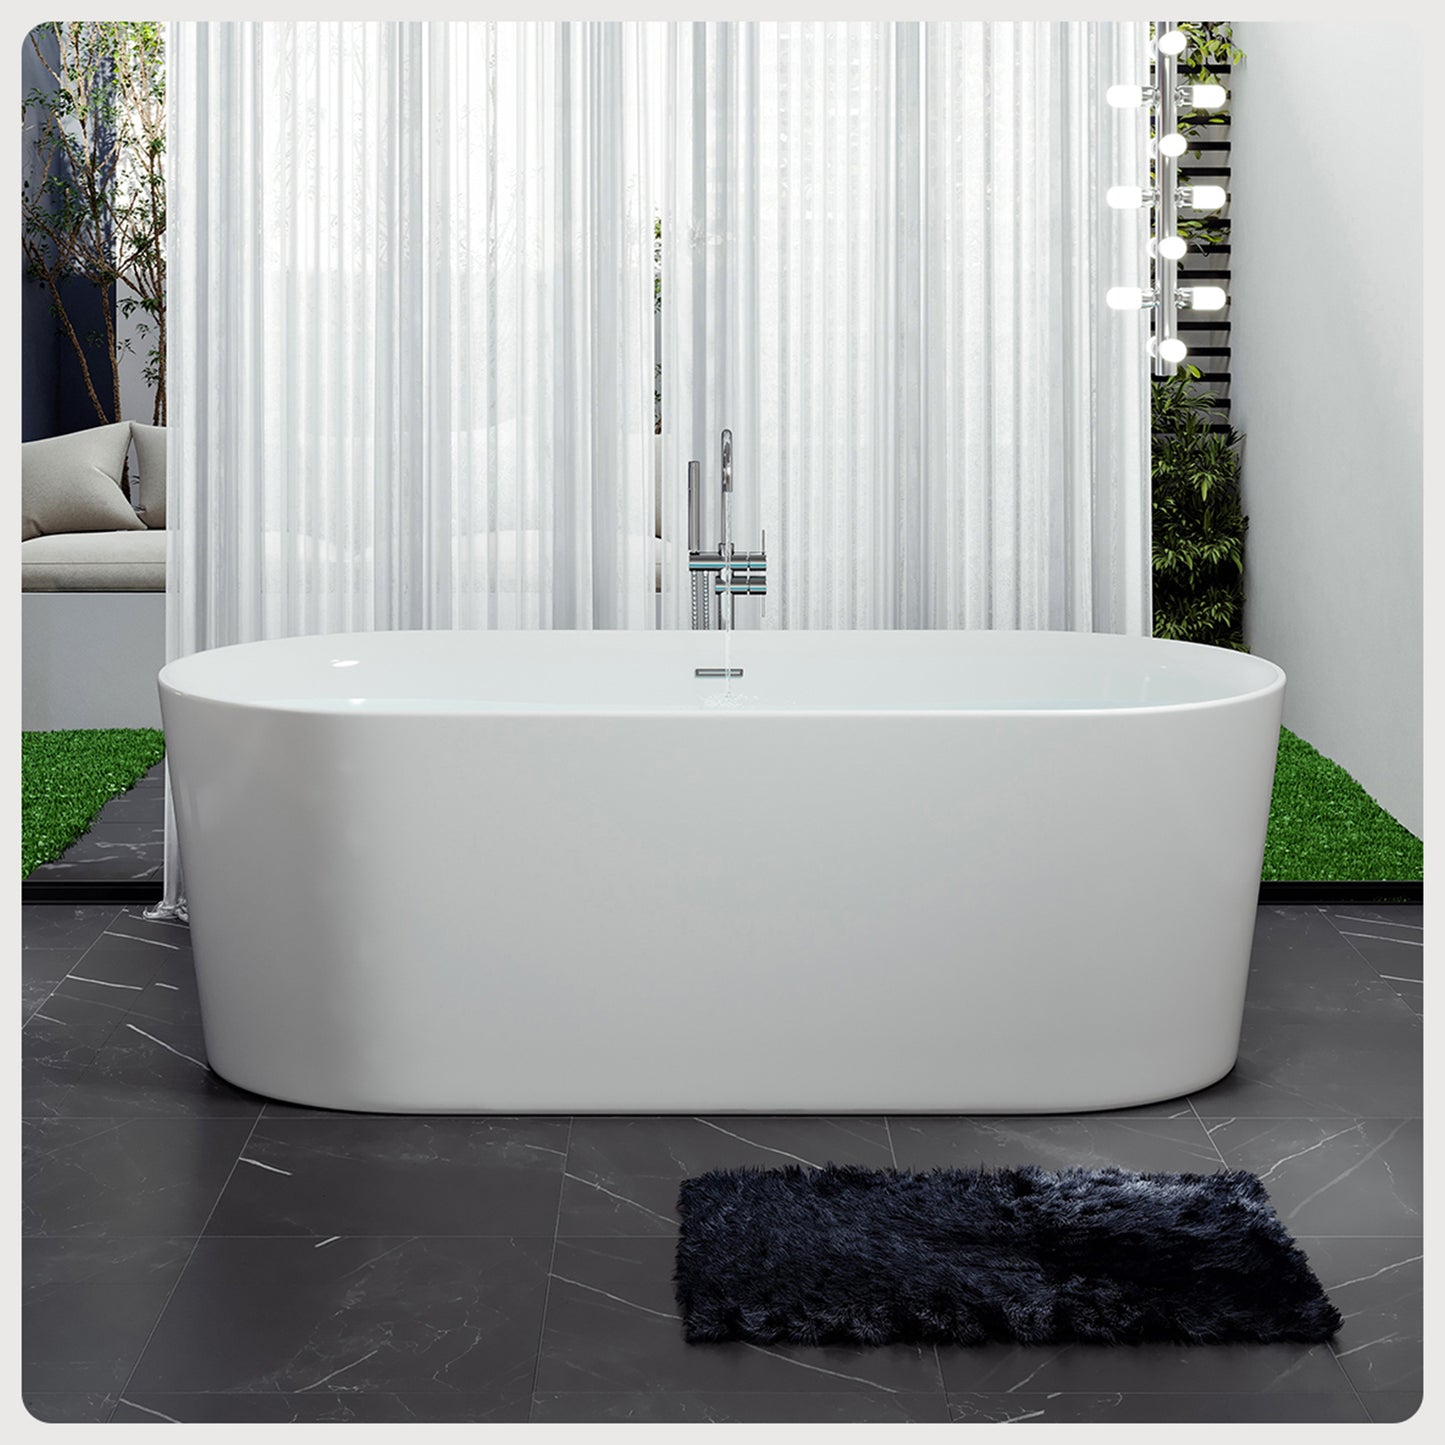 Eviva Rejoice Acrylic 60 Inch Freestanding Bathtub in White